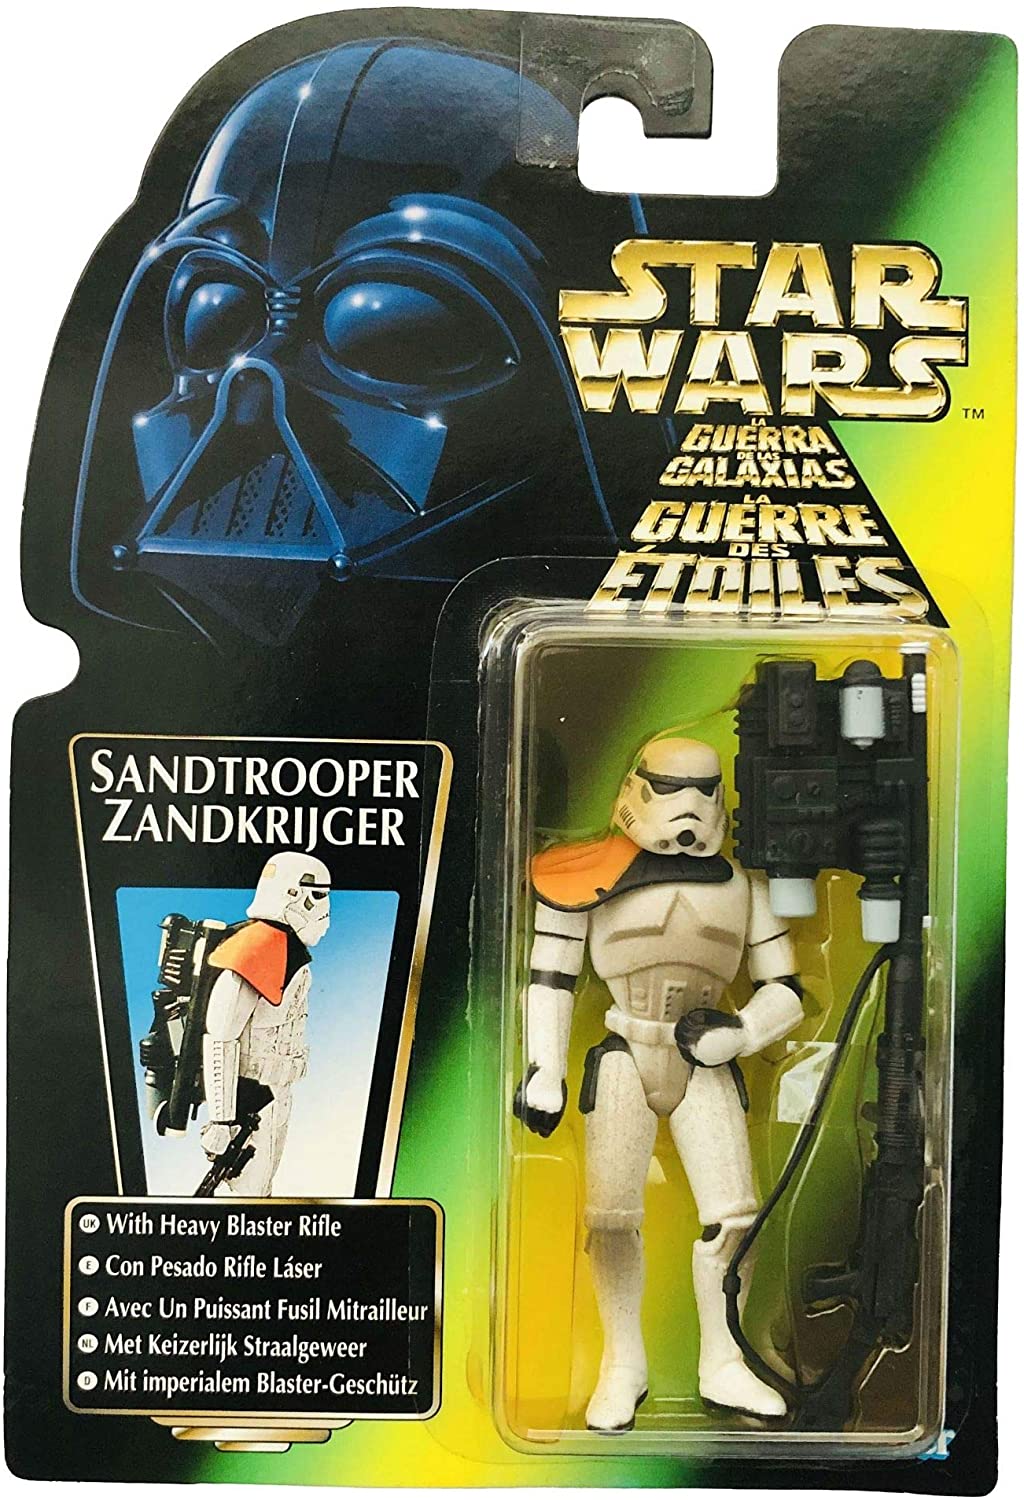 Star Wars Multi-Language Edition Package Sand Trooper